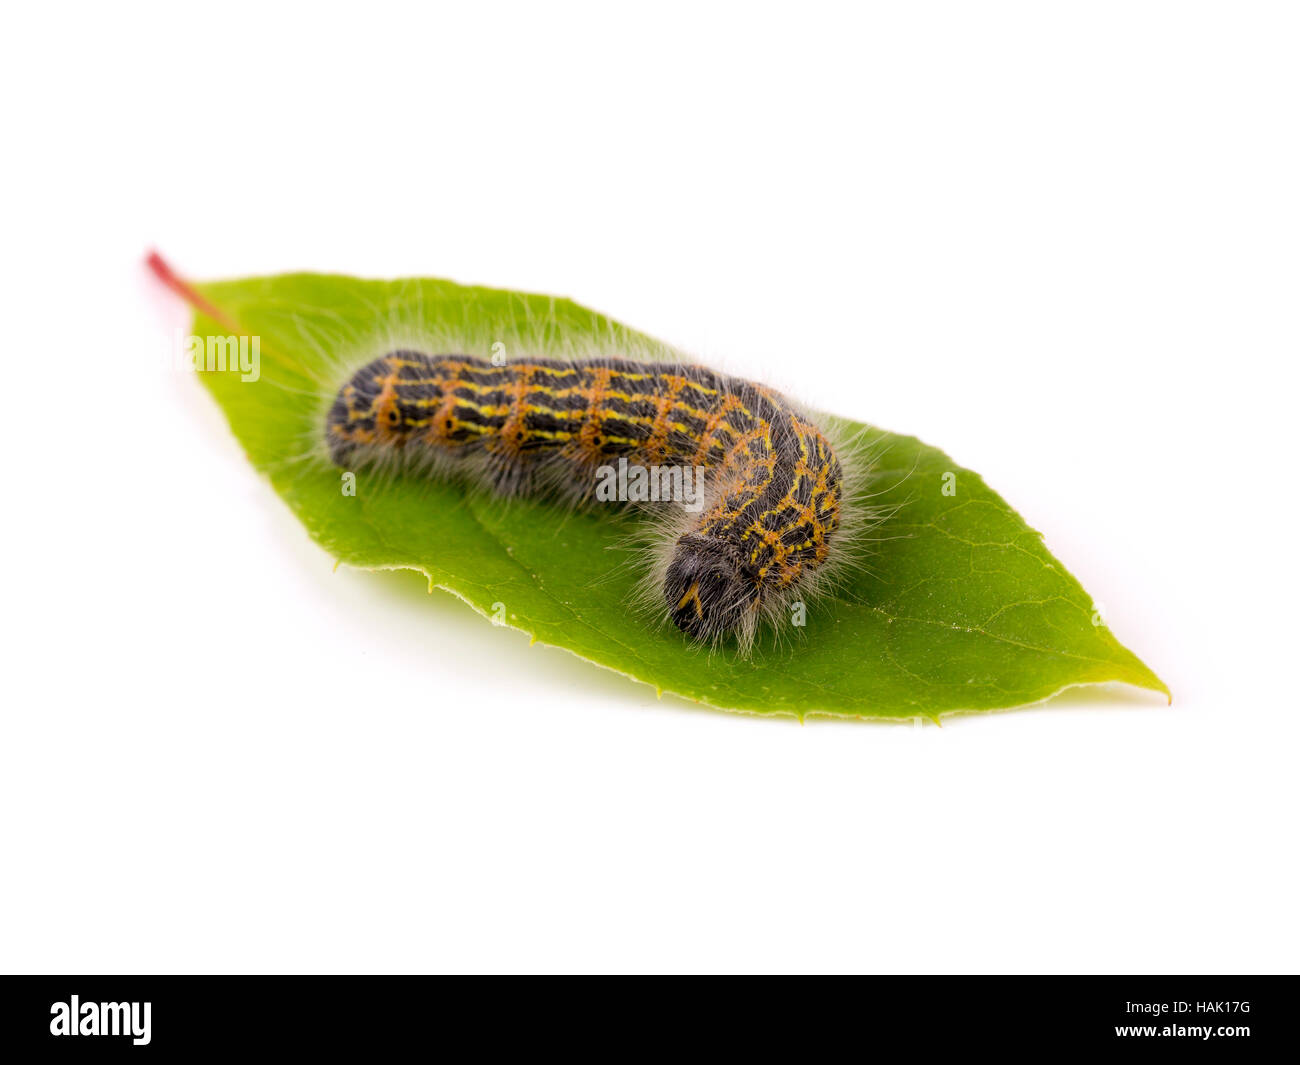 hairy caterpillar worm on green leaf Stock Photo